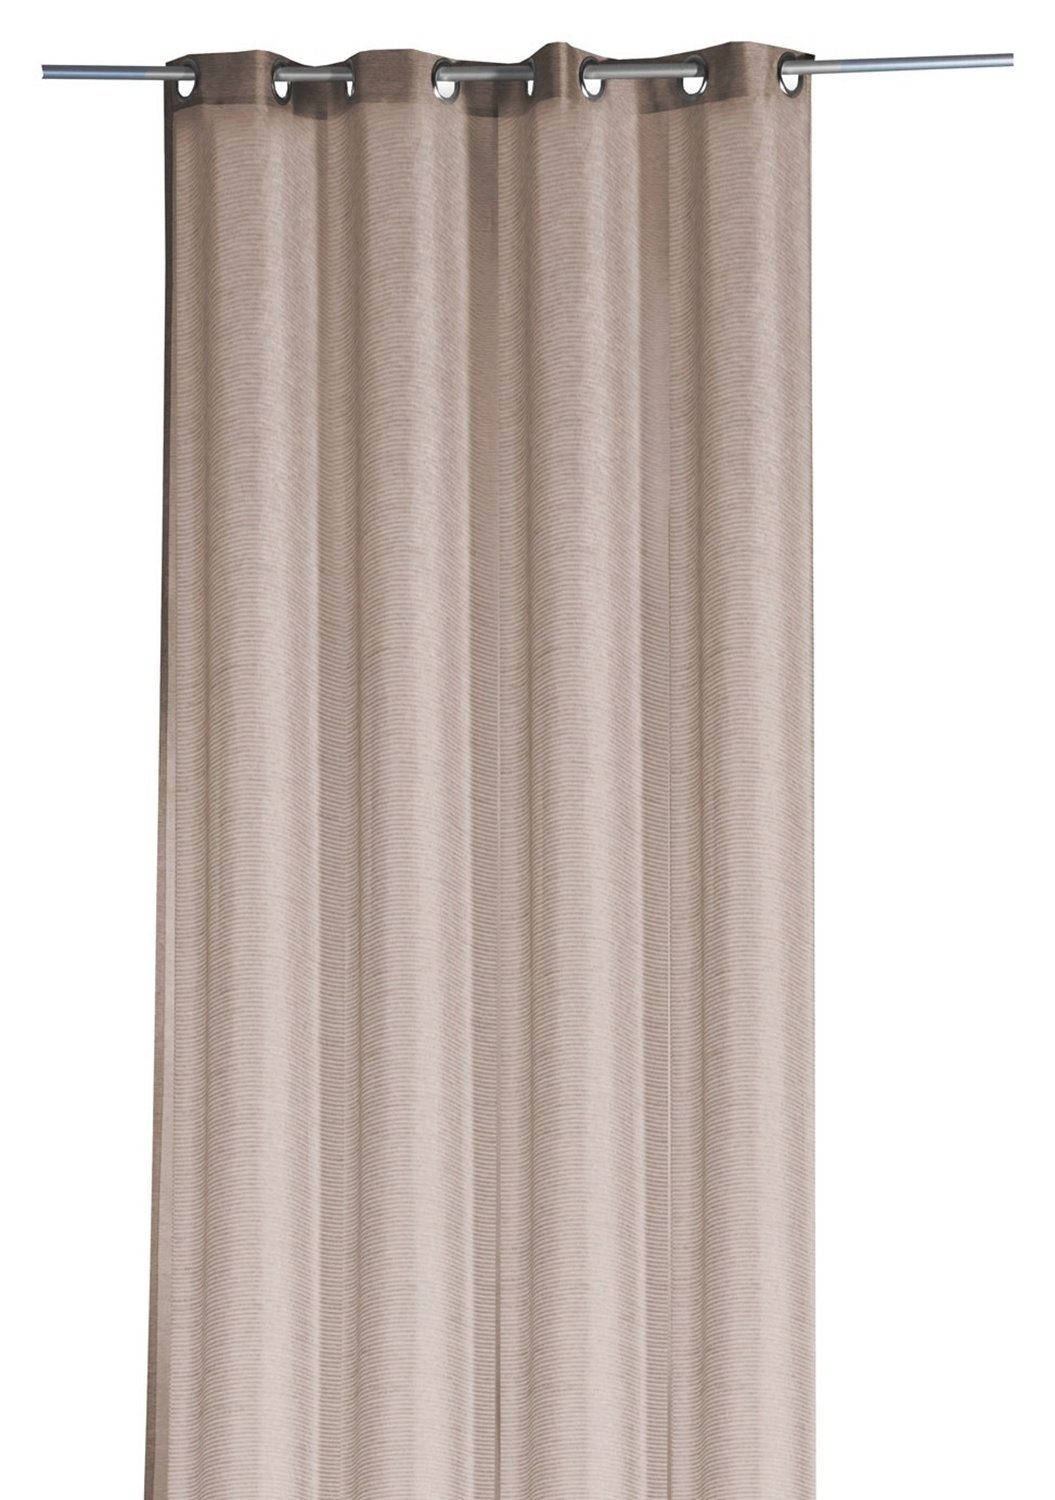 Vorhang SANDY, Ösenschal, Braun, 135 cm, B 245 L halbtransparent cm Ösen, x